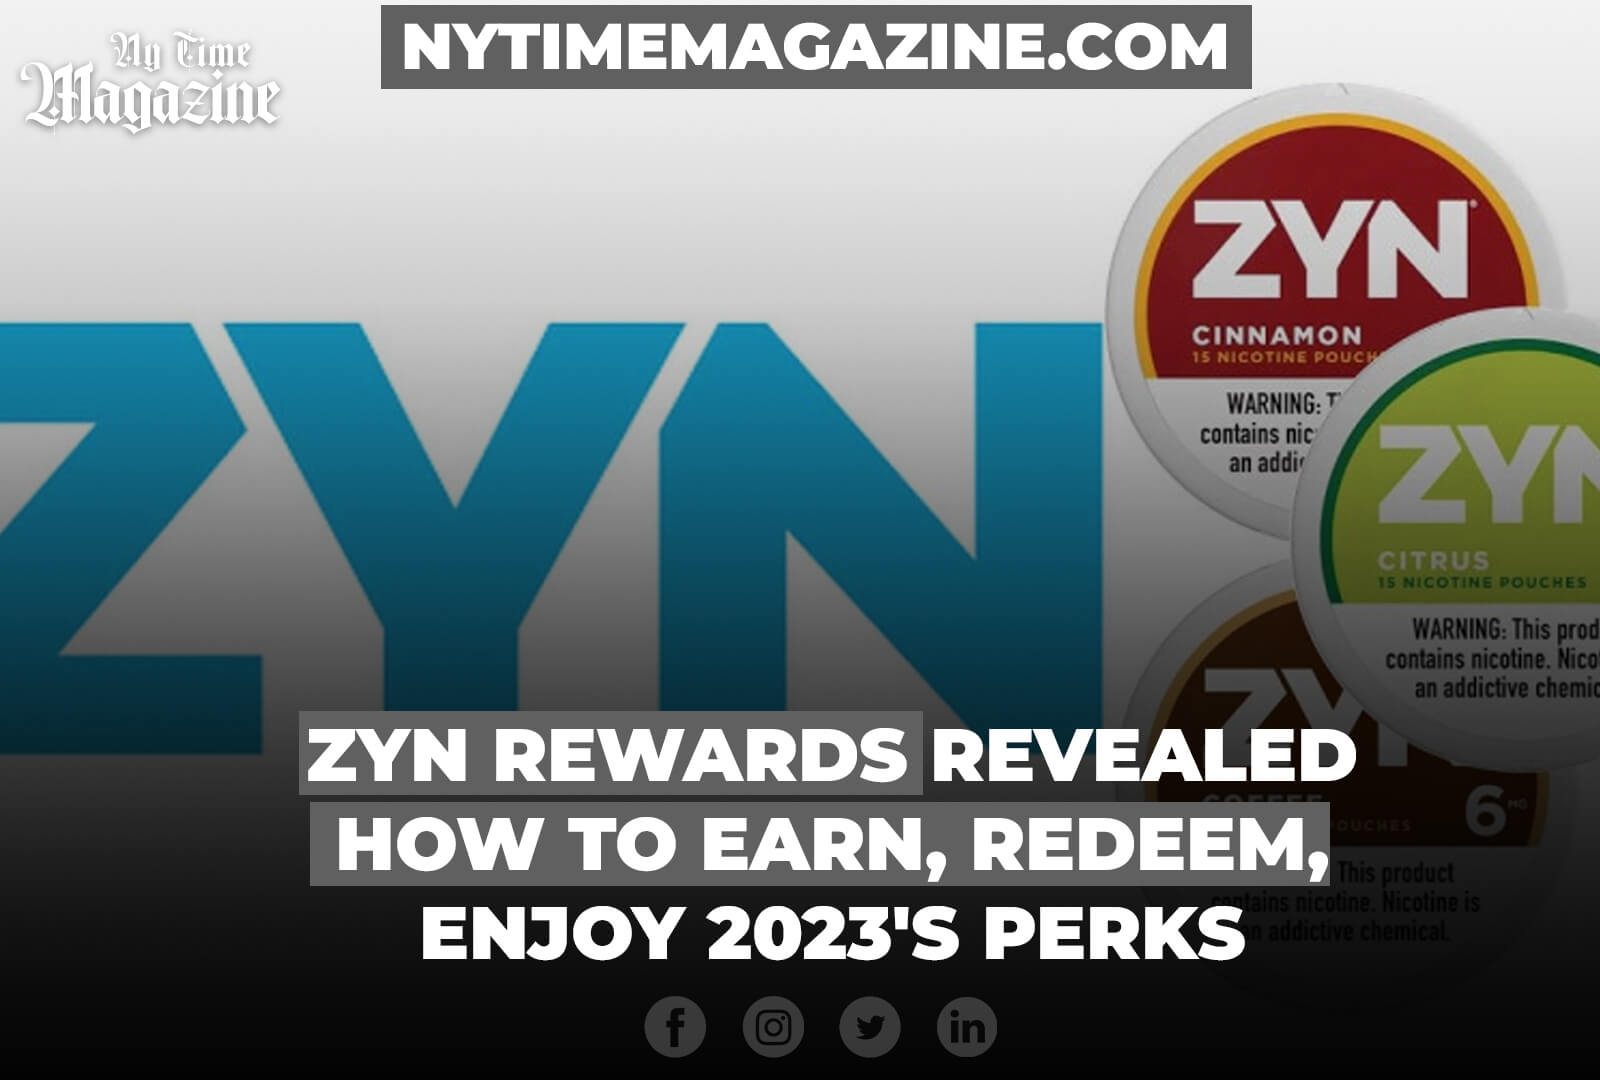 ZYN REWARDS REVEALED: HOW TO EARN, REDEEM, AND ENJOY 2023'S PERKS